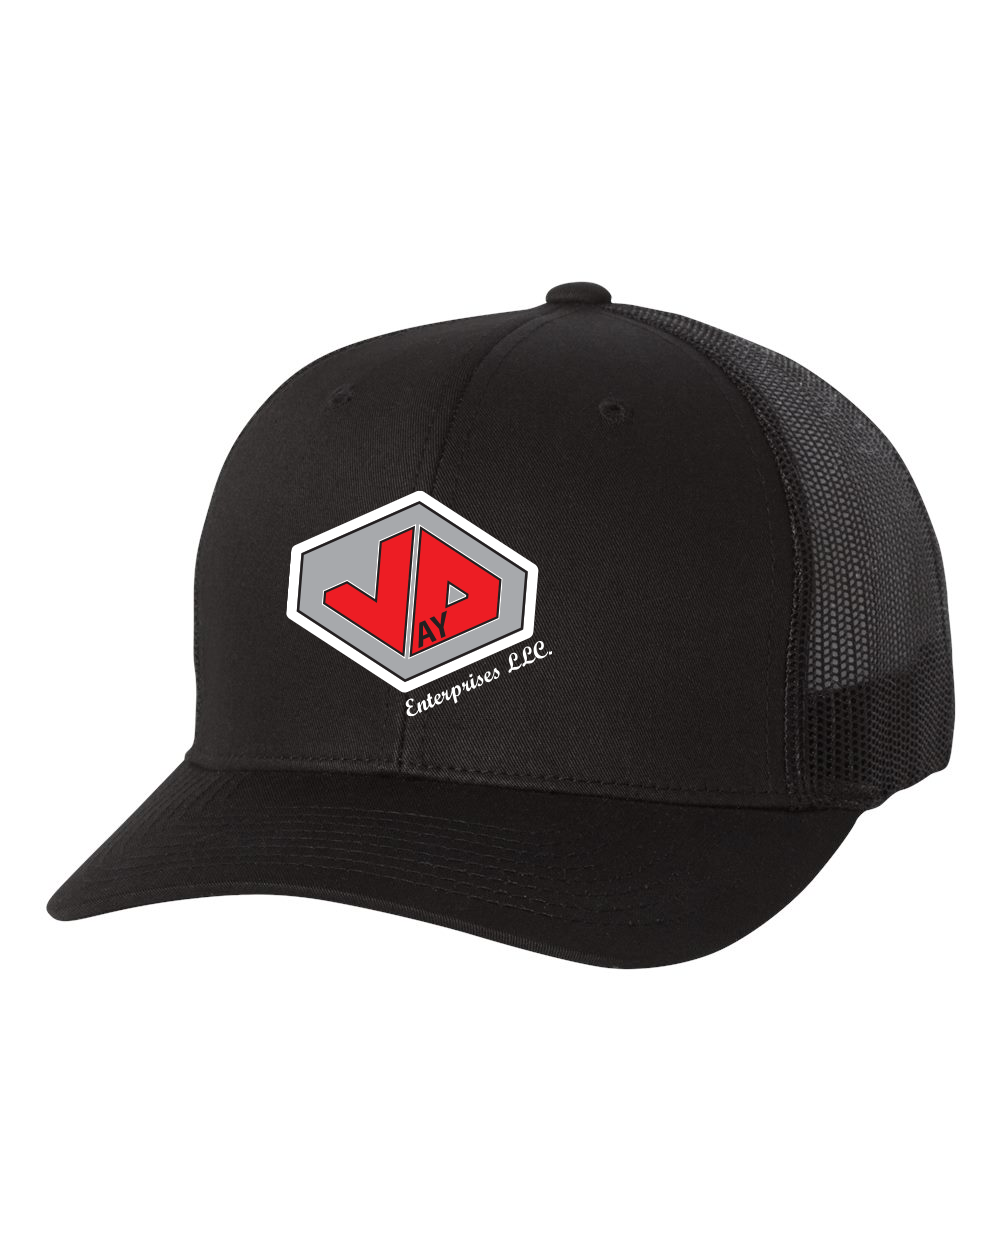 Jay D Enterprises - Six-Panel Retro Trucker Cap